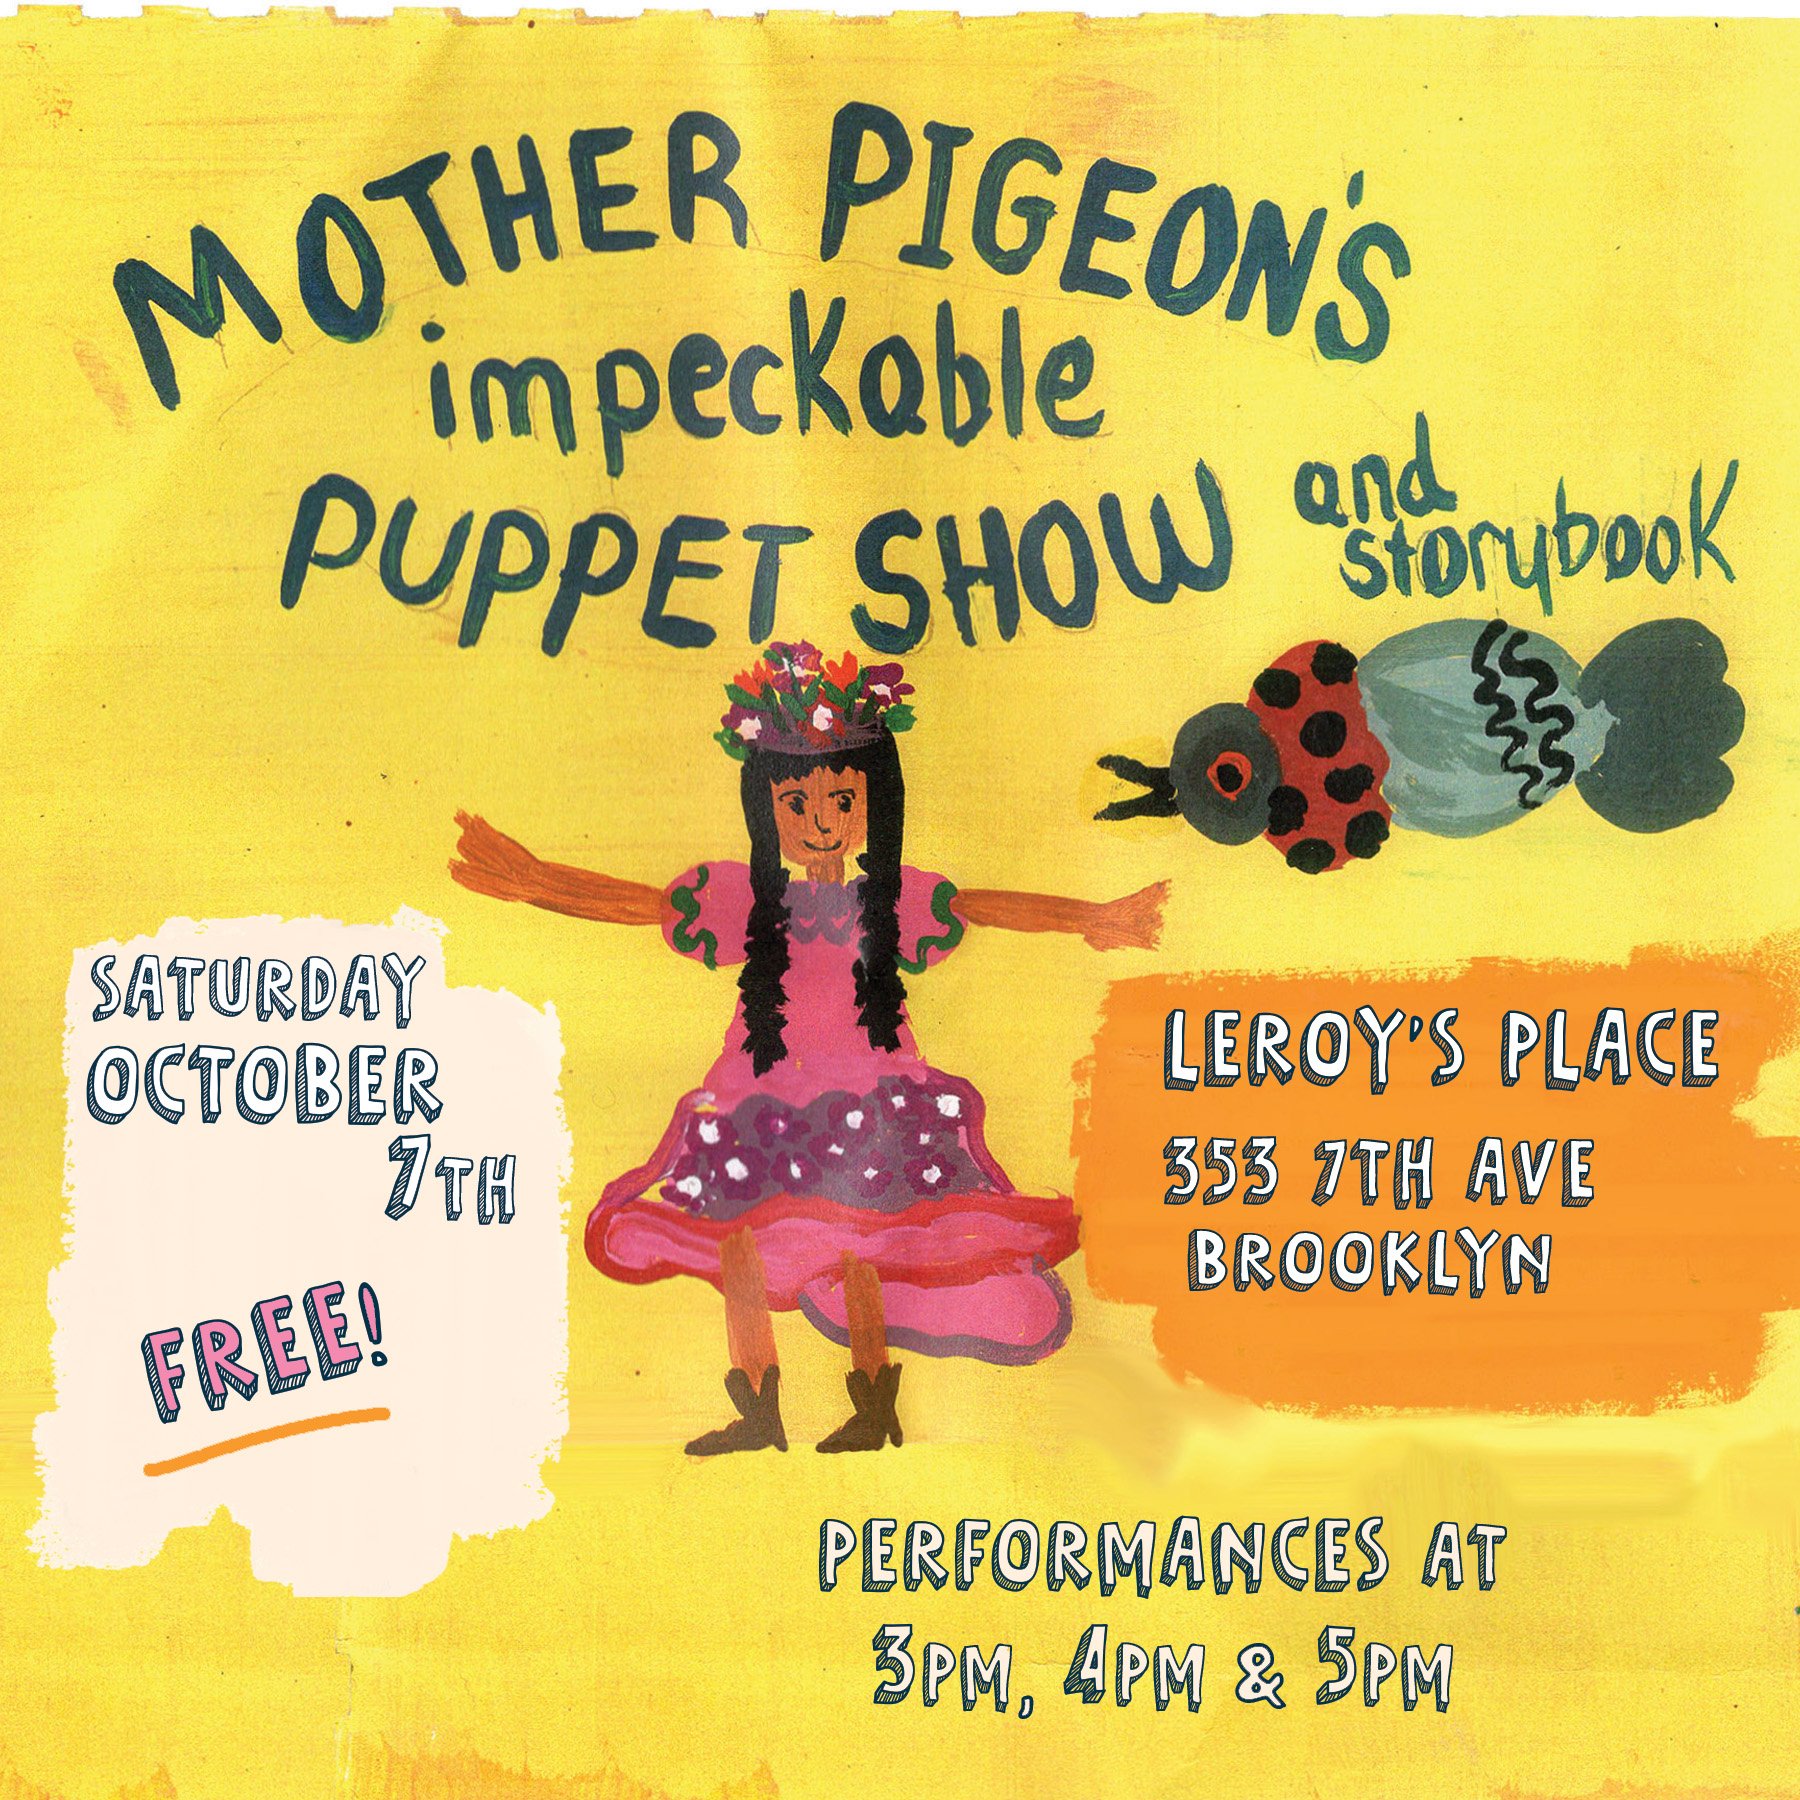 Mother Pigeon's Impeckable Puppet Show